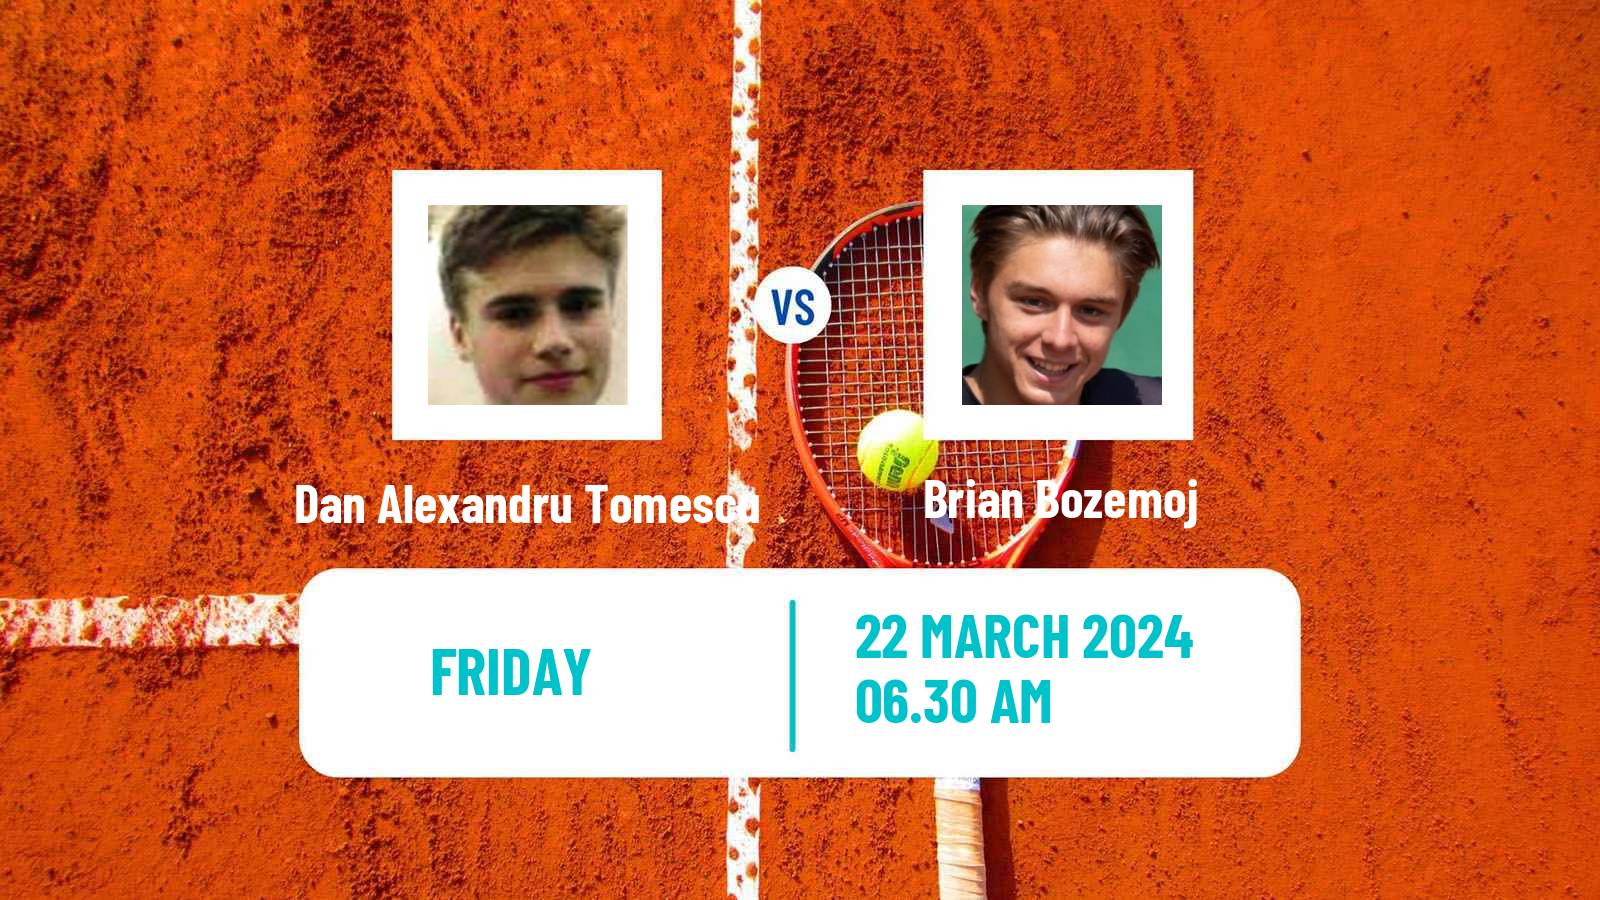 Tennis ITF M15 Alaminos Larnaca 2 Men Dan Alexandru Tomescu - Brian Bozemoj